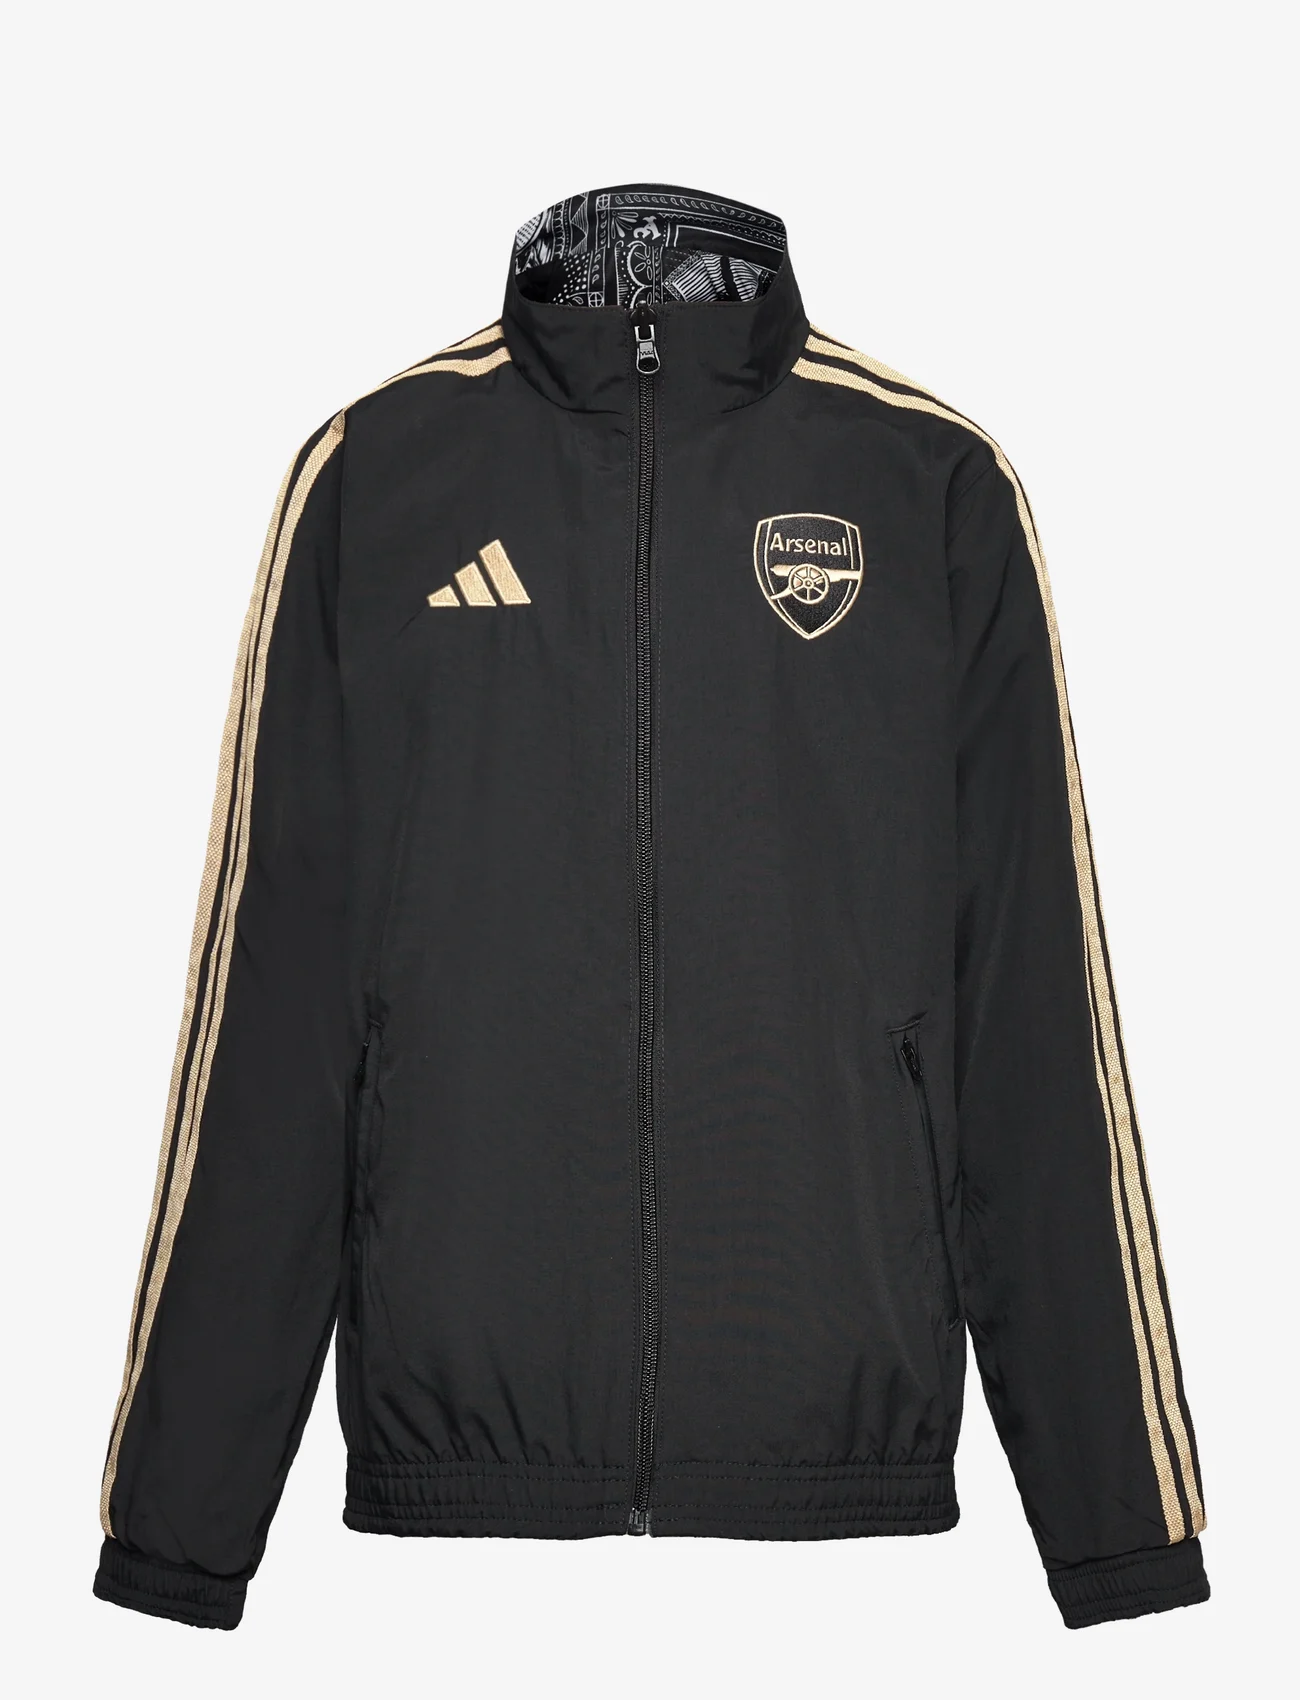 adidas Performance - Arsenal Ian Wright Anthem Jacket Kids - frühlingsjacken - black - 0